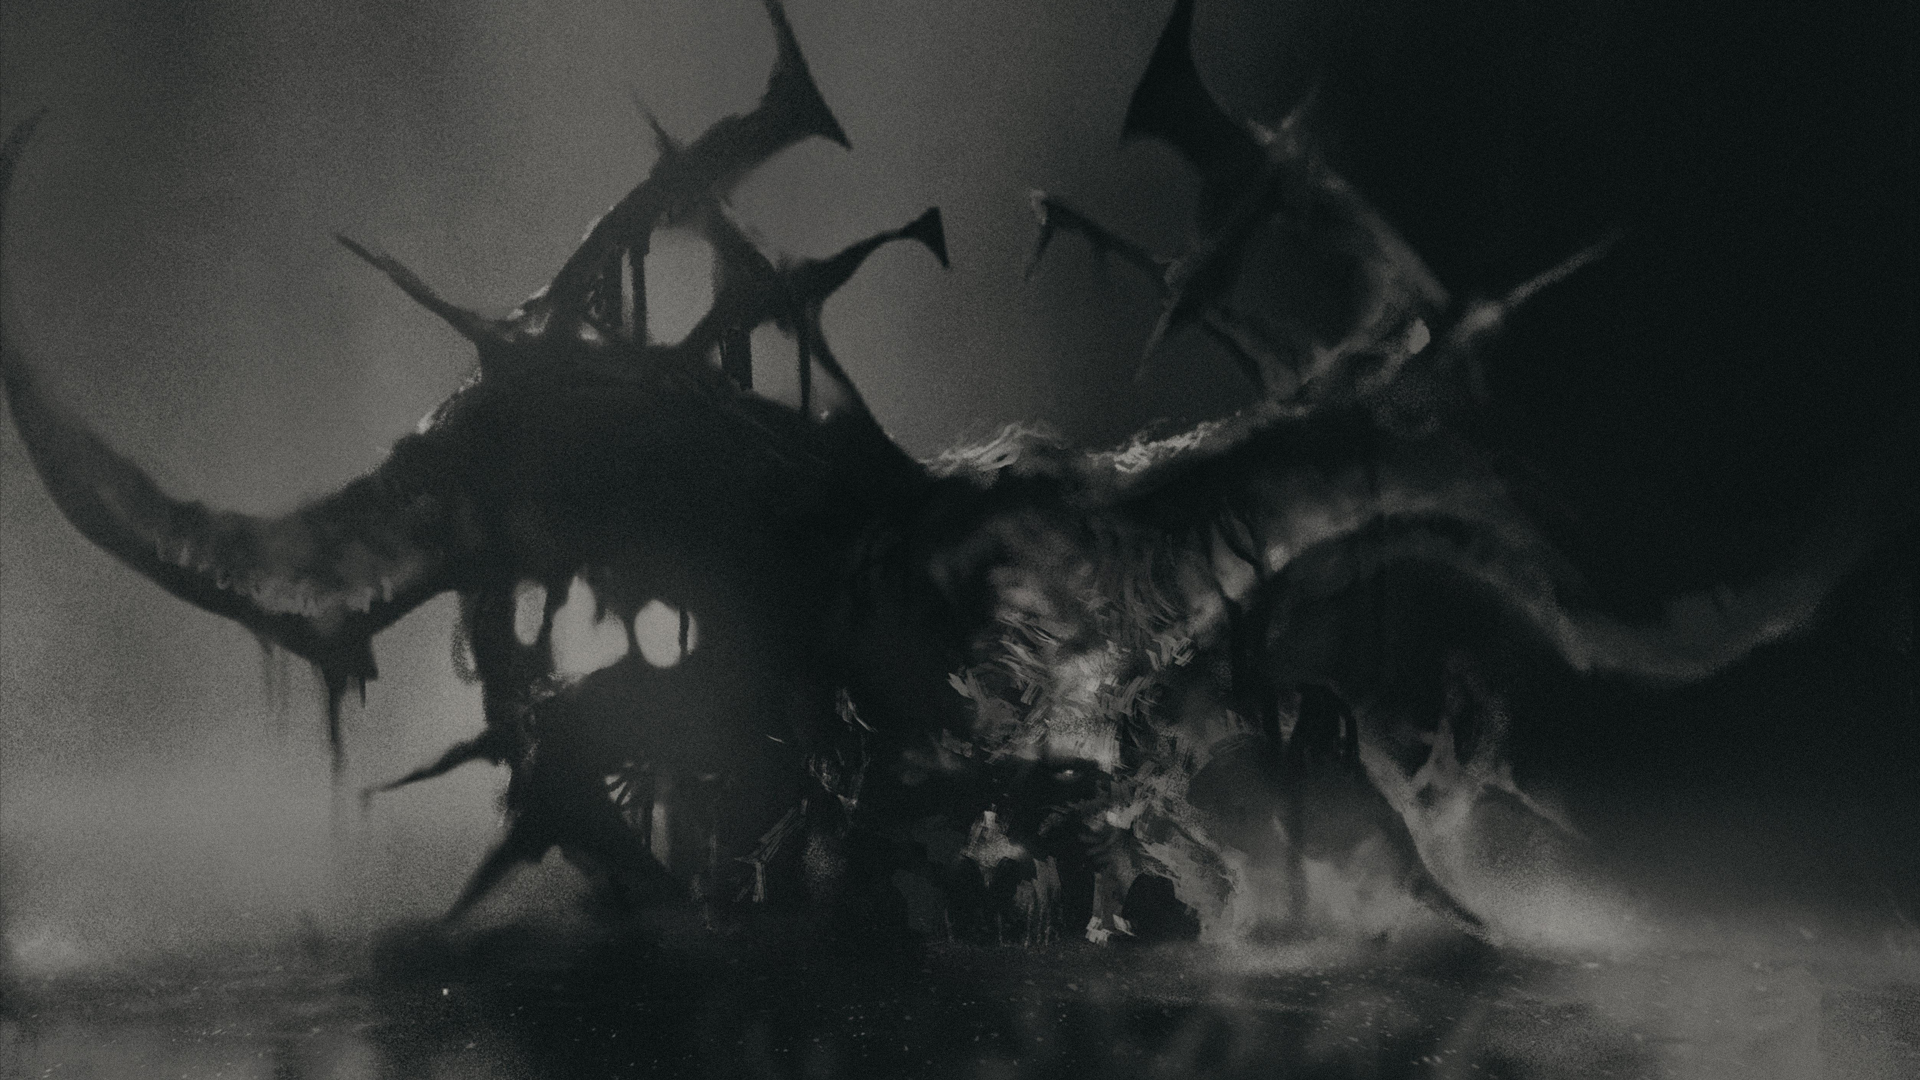 Концепт-арт расширения Diablo 4: Vessel of Hatred, на котором изображен Наханту